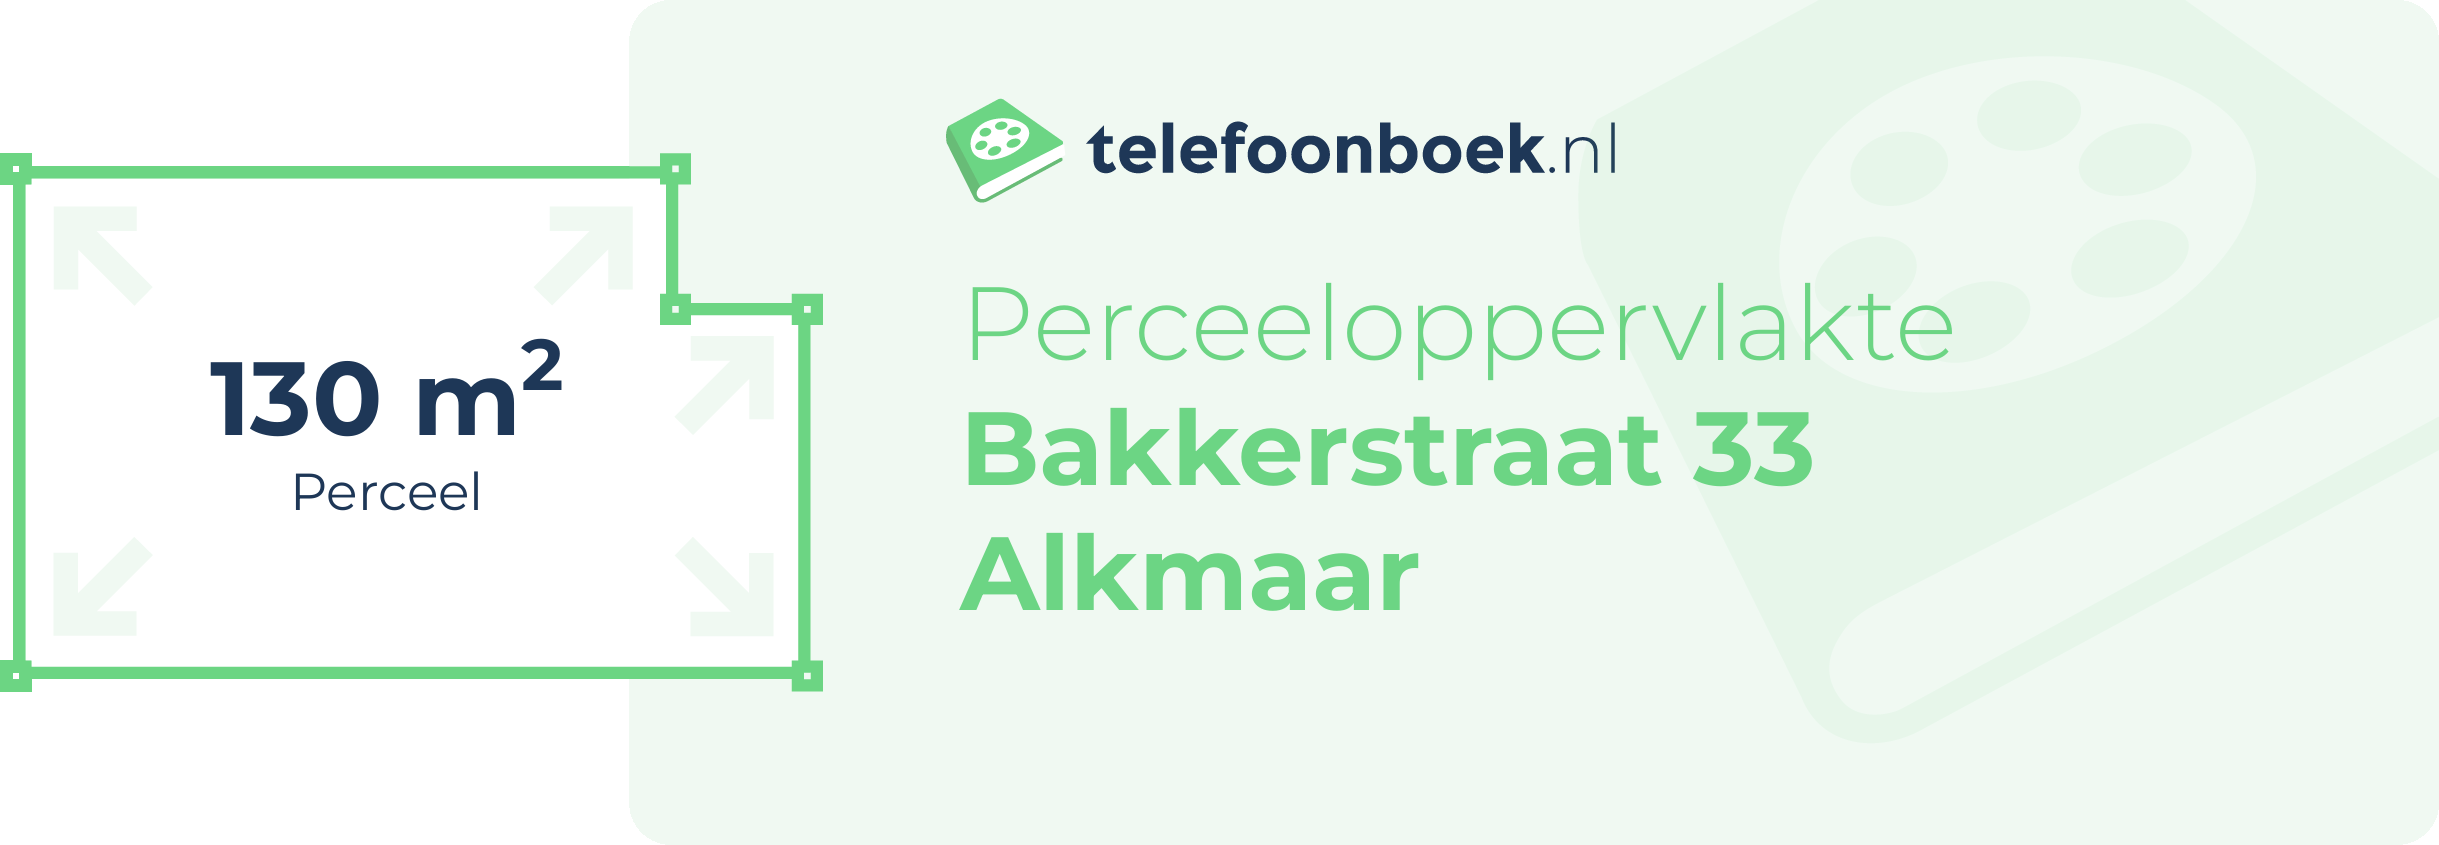 Perceeloppervlakte Bakkerstraat 33 Alkmaar